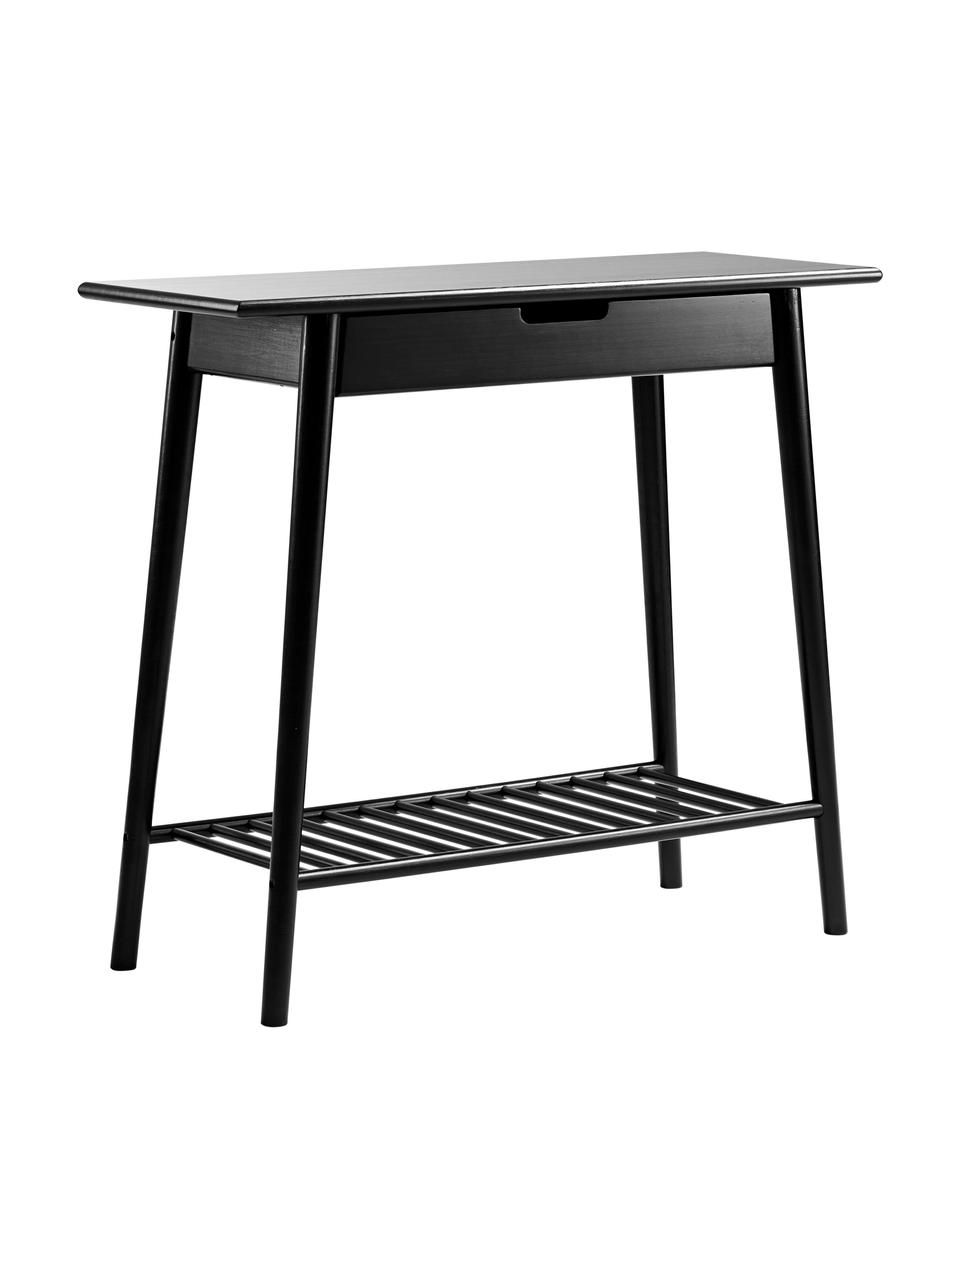 Bambusový konzolový stolek se zásuvkou Noble, Lakovaný a karbonizovaný bambus, Černá, Š 90 cm, V 32 cm